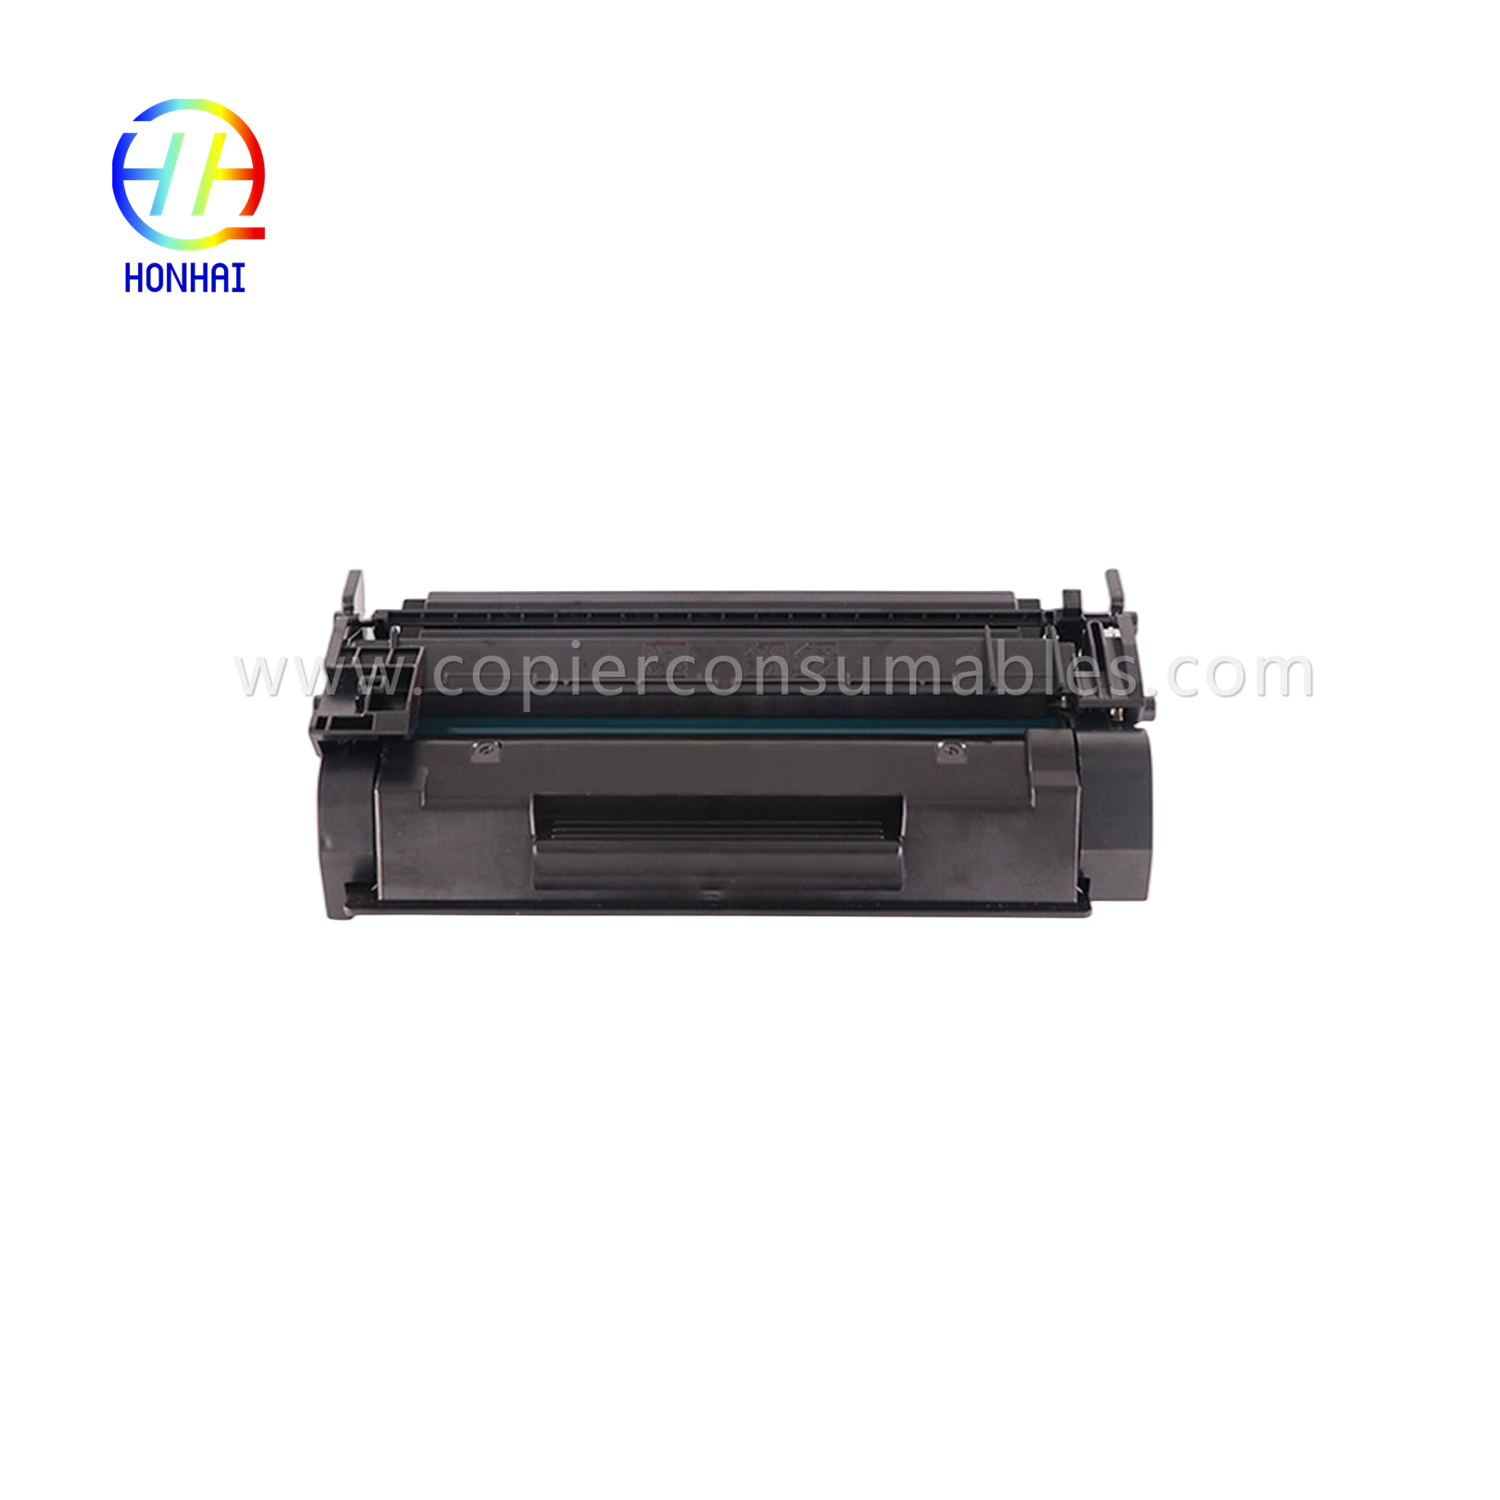 Toner cartridge for HP CF259X LaserJet Pro M404n M404dn  M404dw M428dw HP LaserJet Pro MFP M428dn  M428fdw